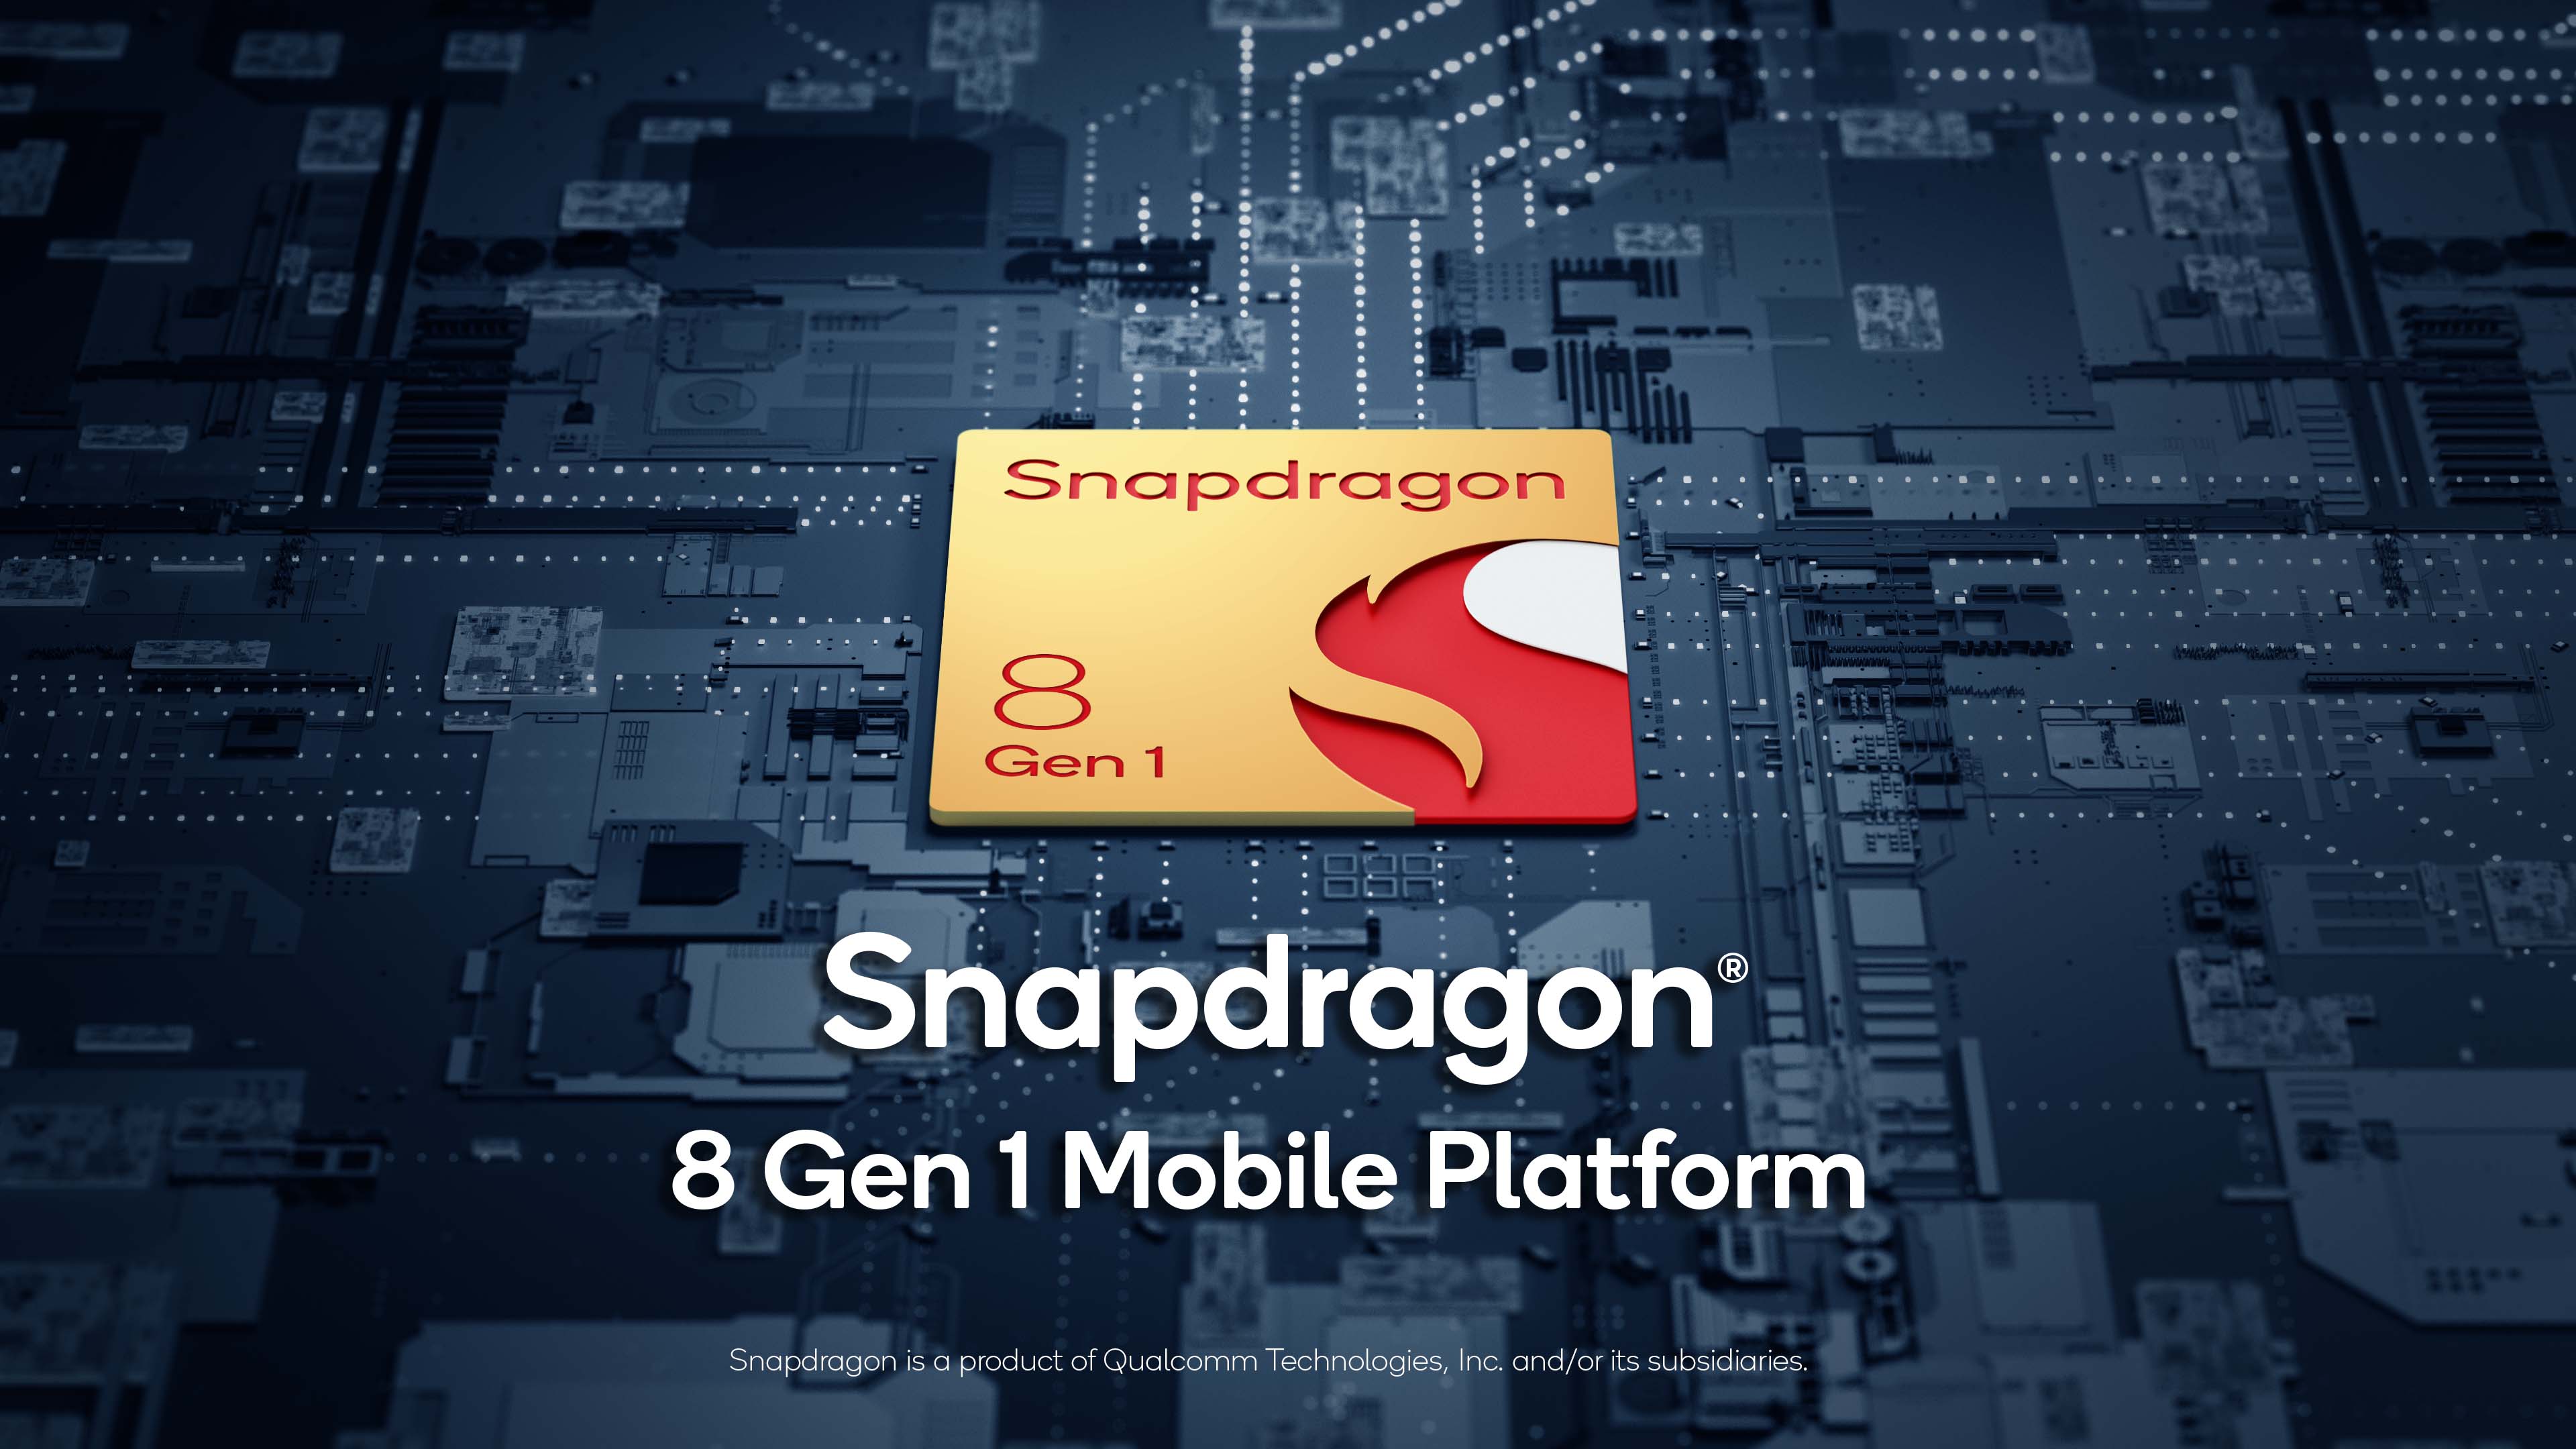 snapdragon 8 gen 1 mobile platform key visual angle 3